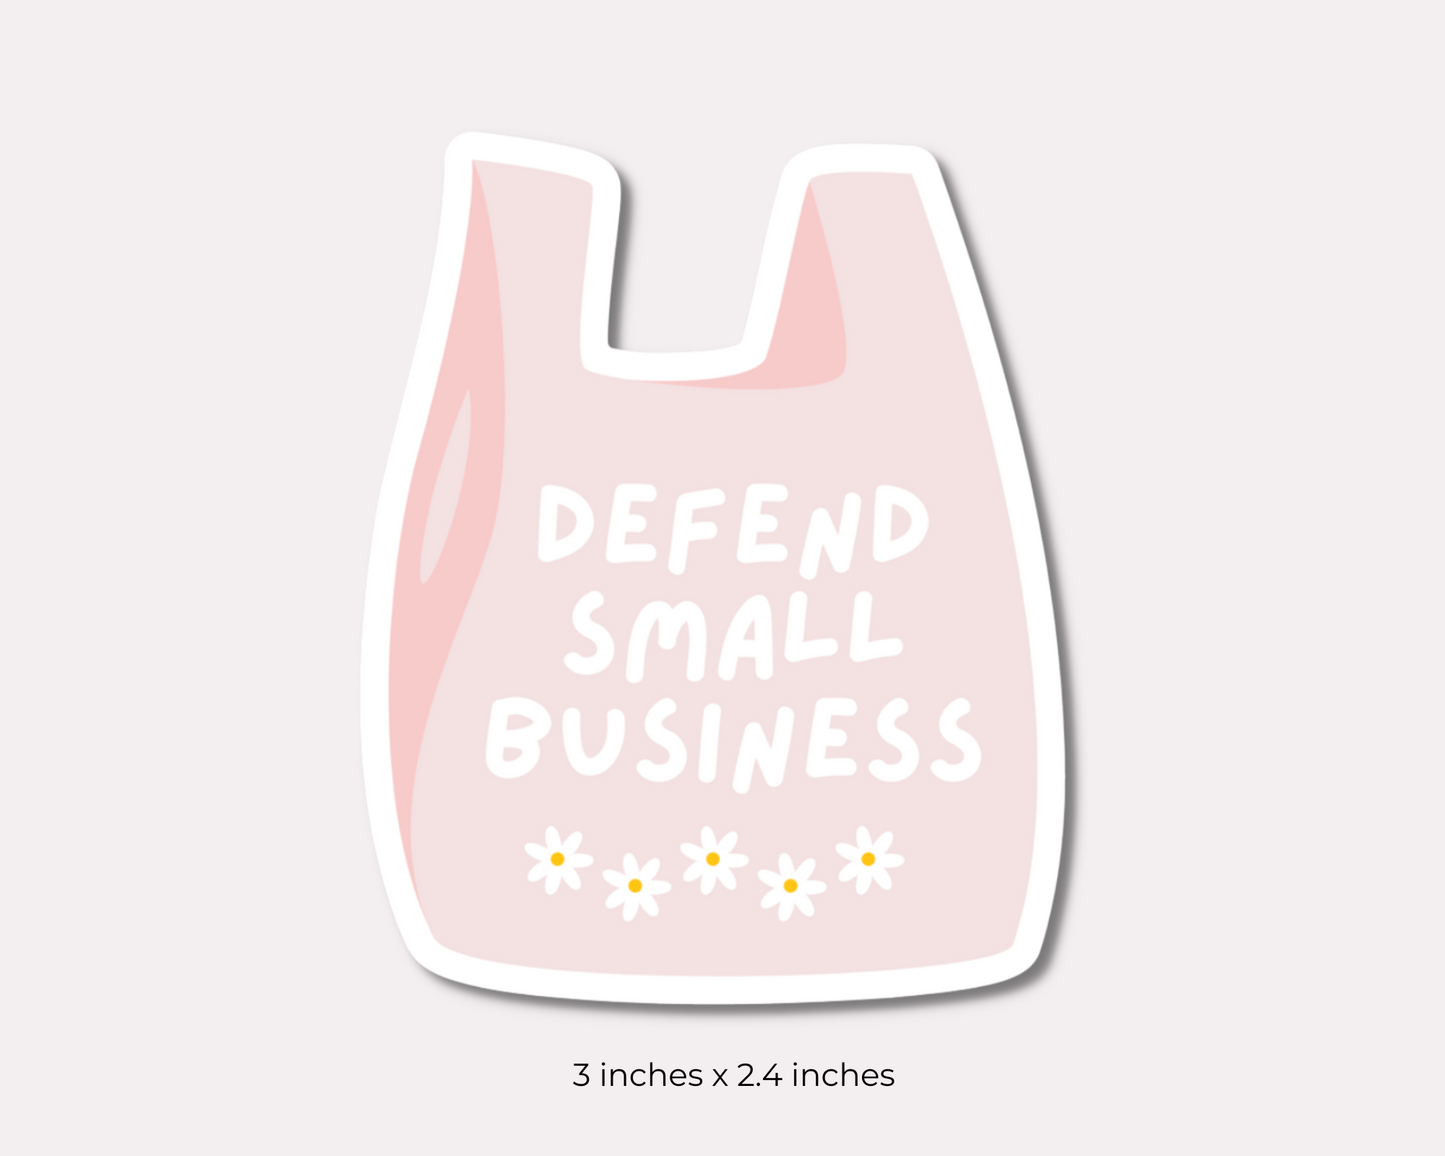 Defend Small Business Sticker